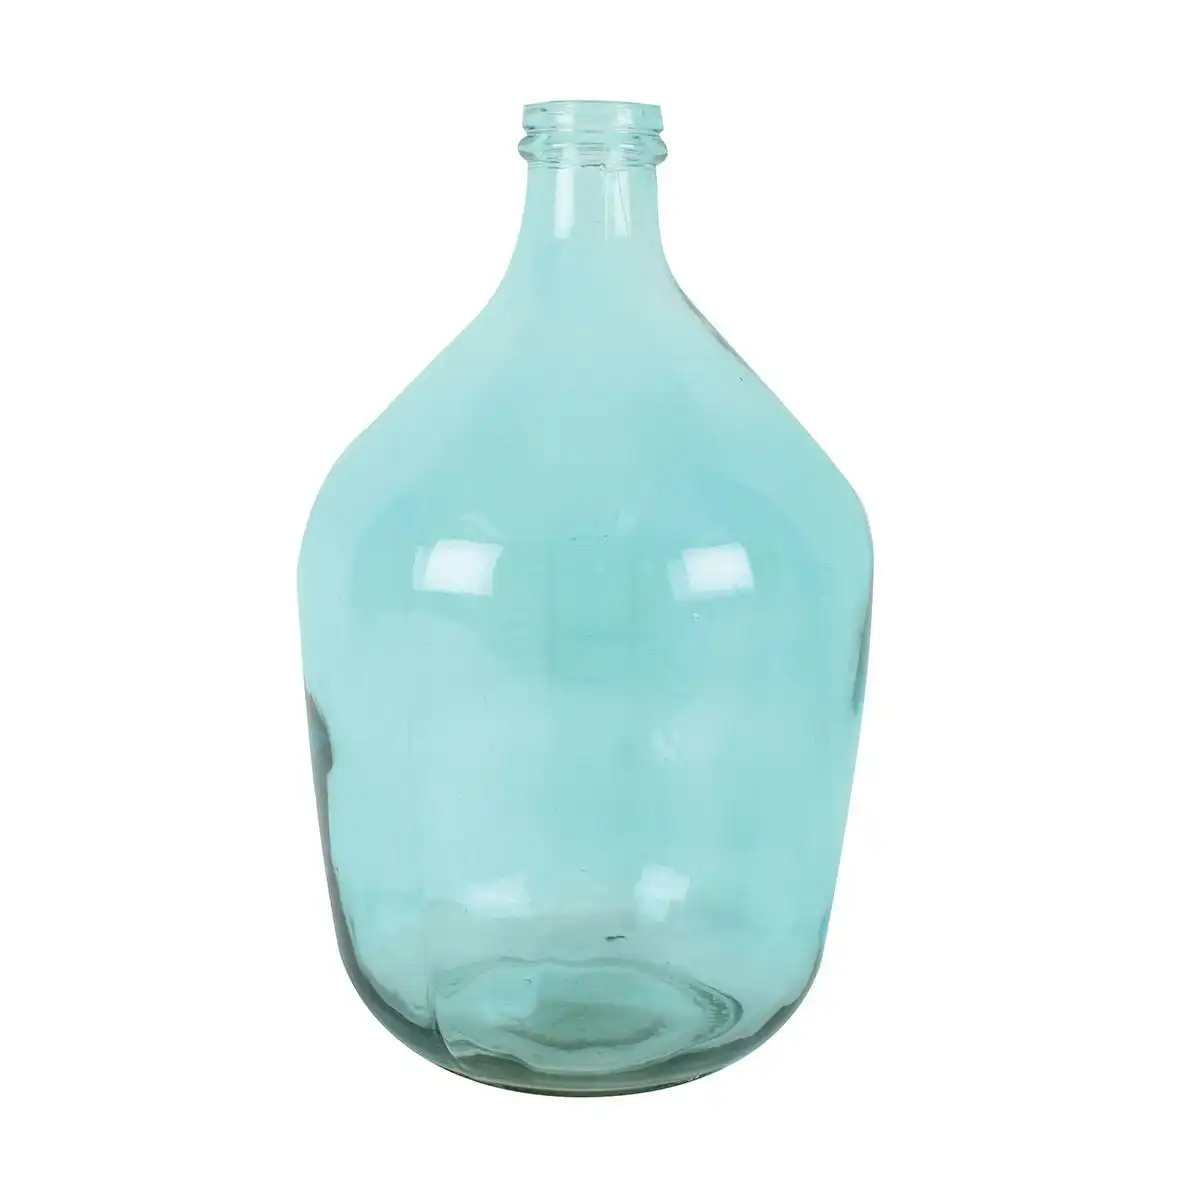 Hosheia Bottle Neck Glass Vase Aqua 38 x 23 x 23cm